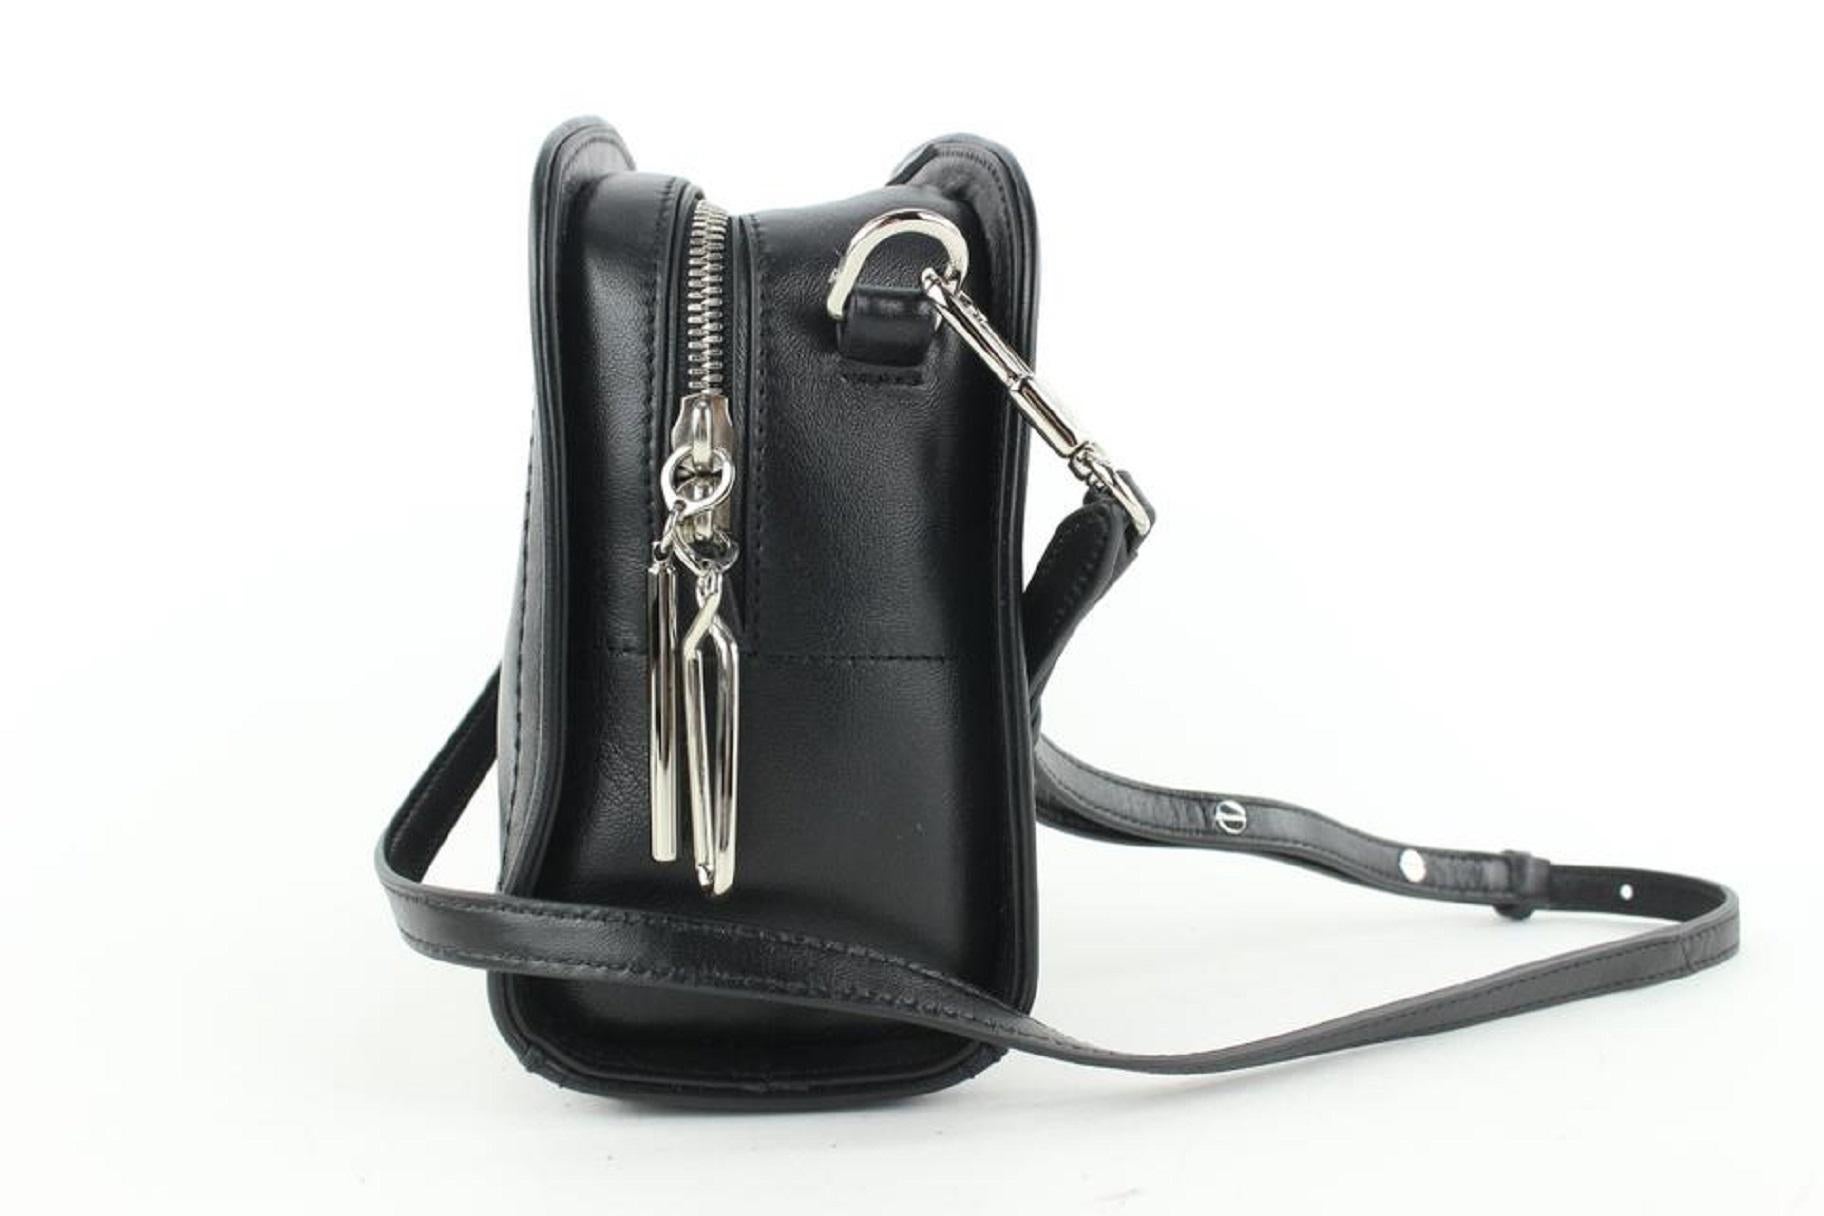 3.1 Phillip Lim Black Leather Crossbody Bag 483pl46 3